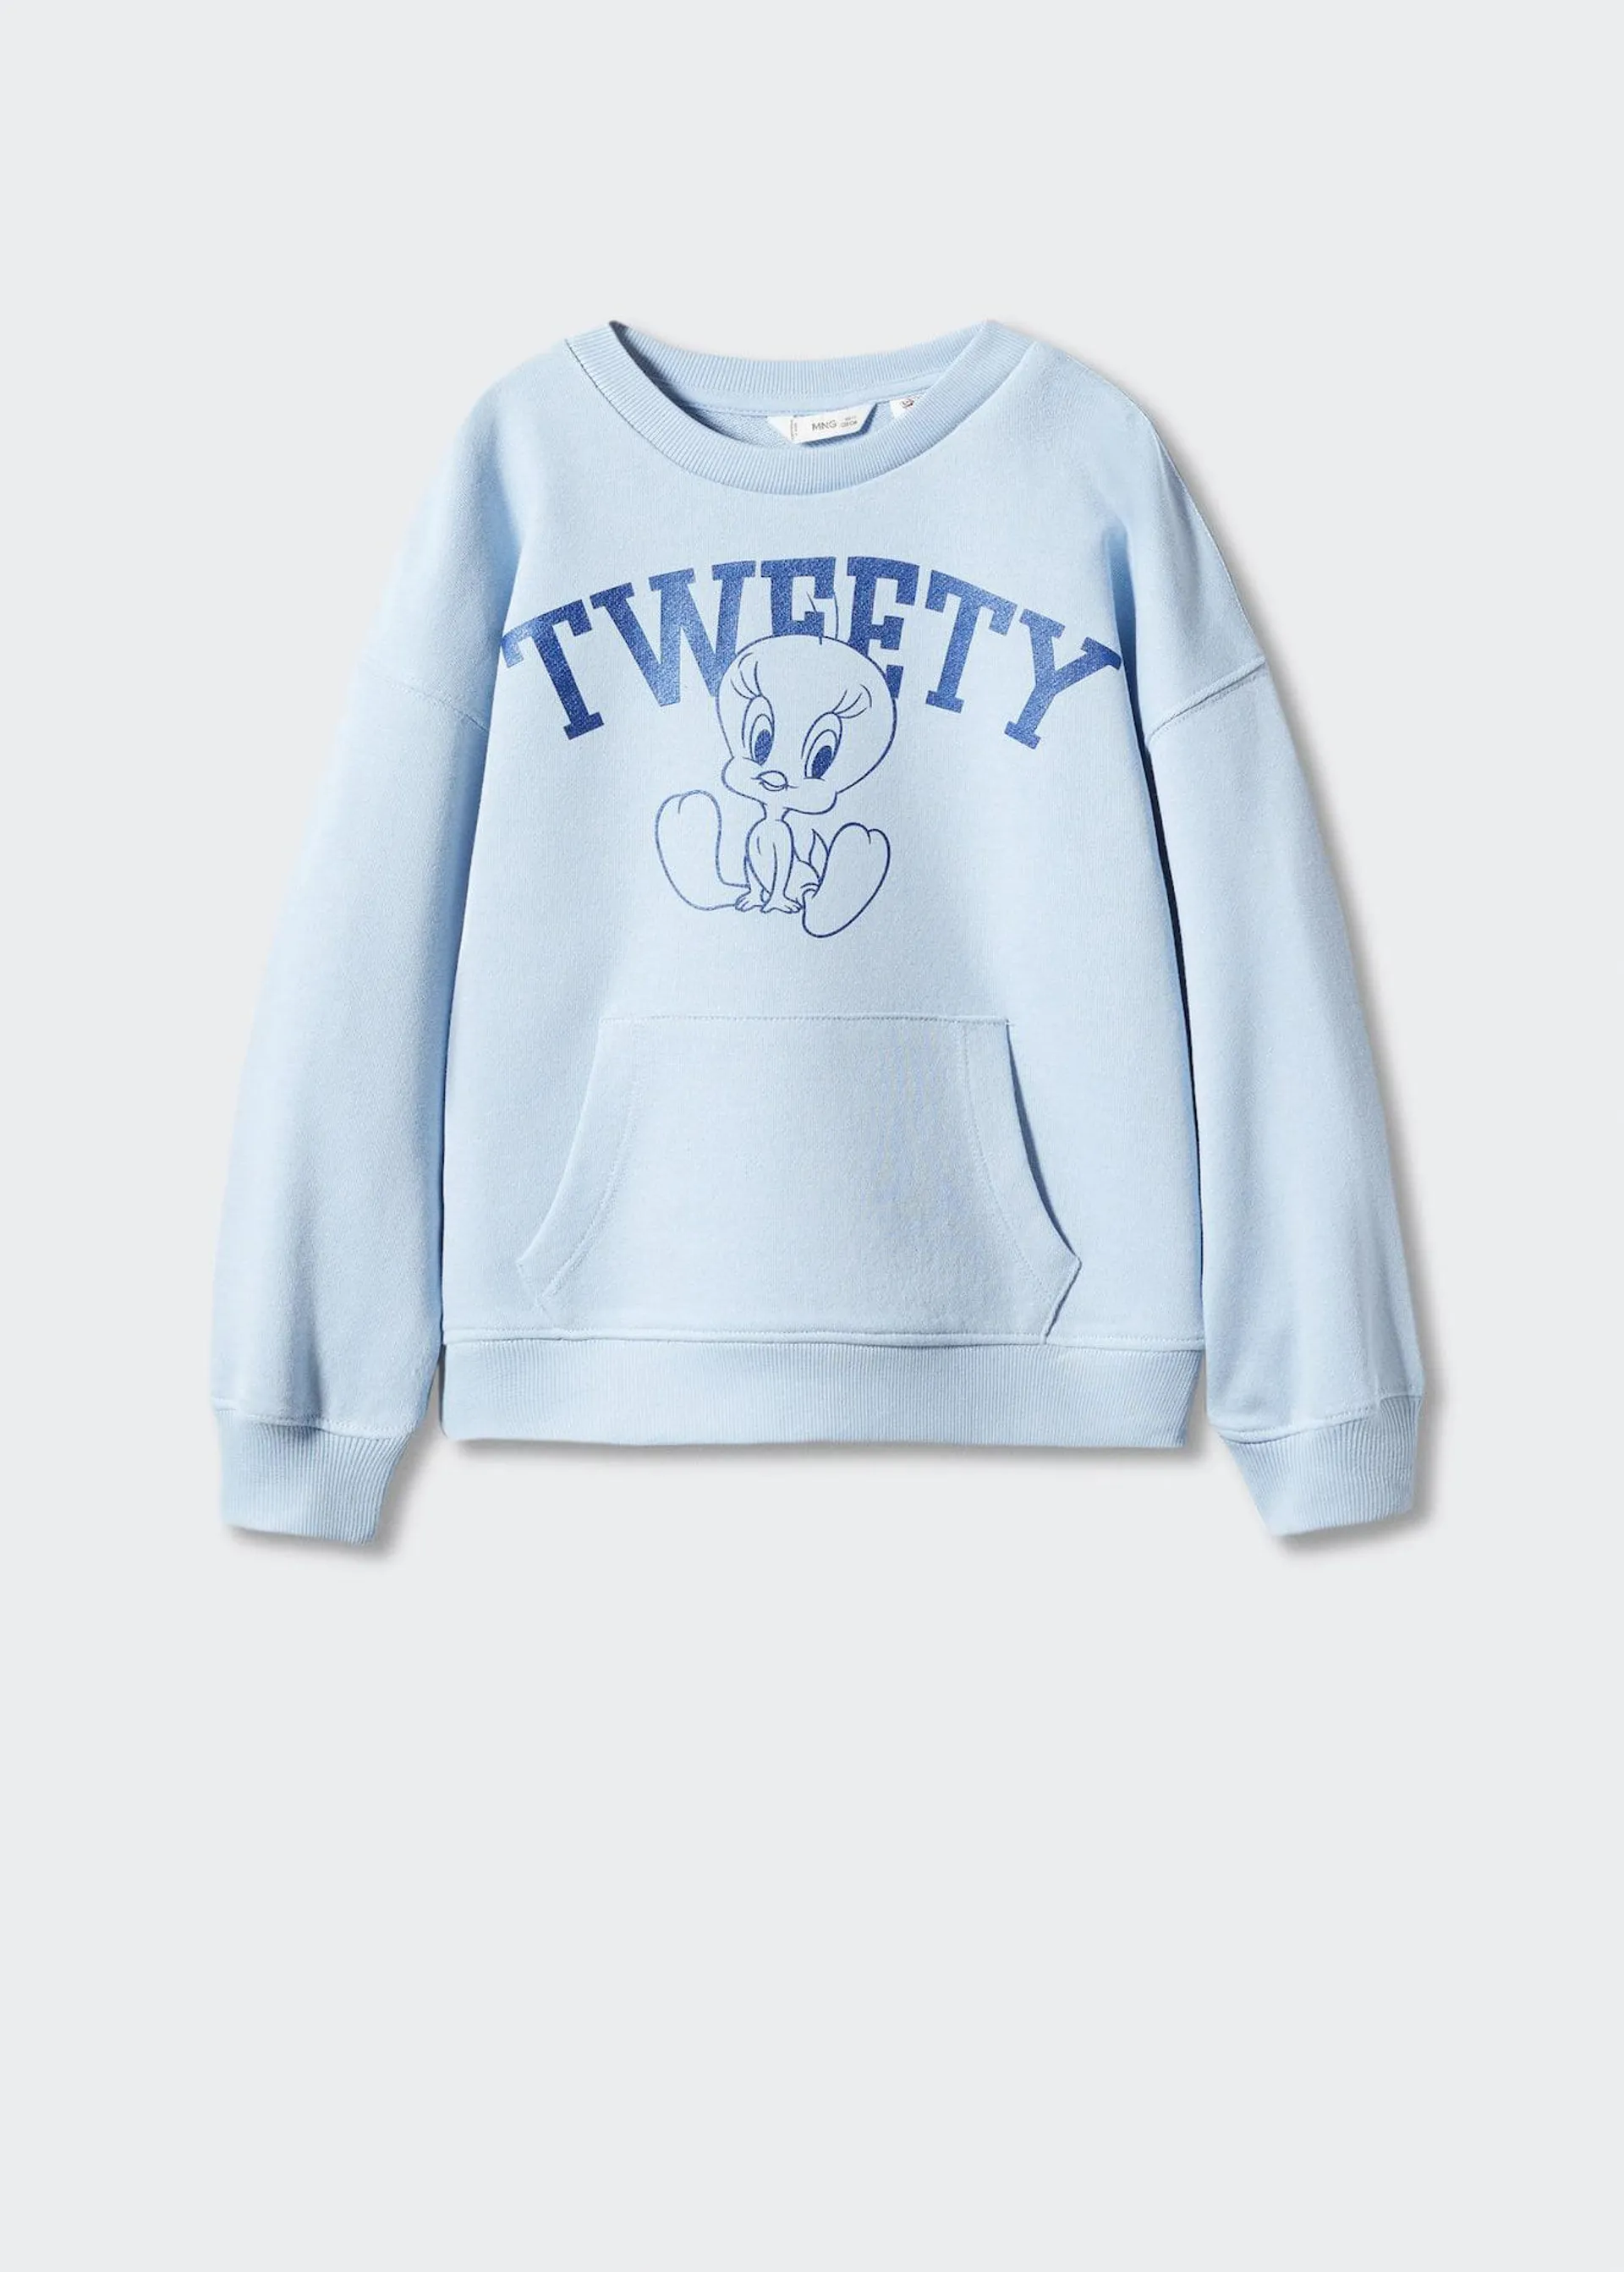 Tweety sweatshirt